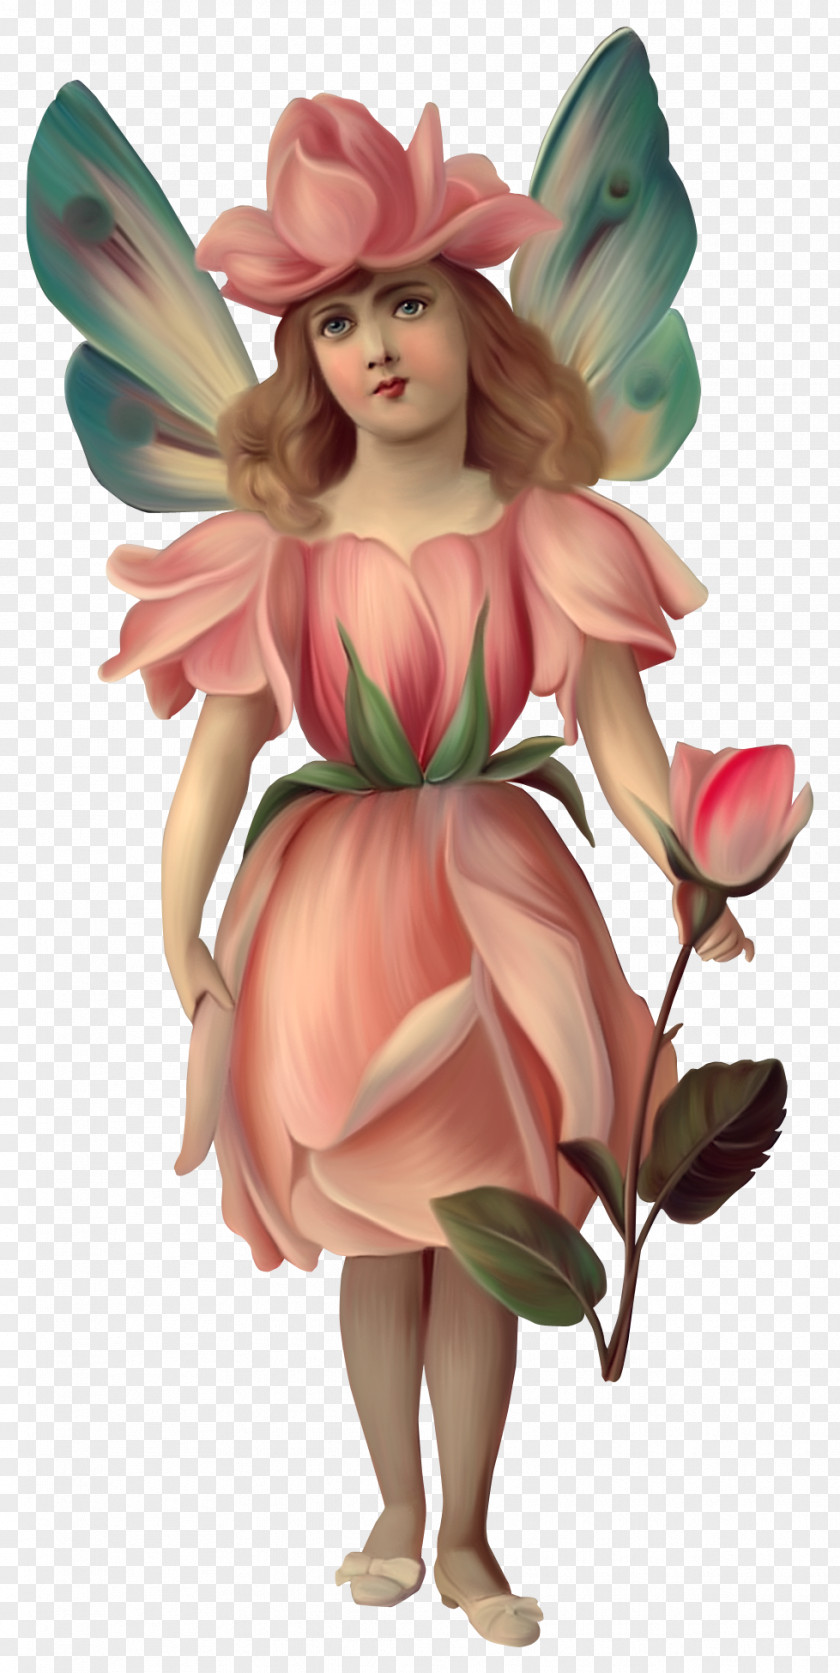 Beautiful Flower Fairy Cicely Mary Barker Victorian Era Angel Bokmxe4rke PNG